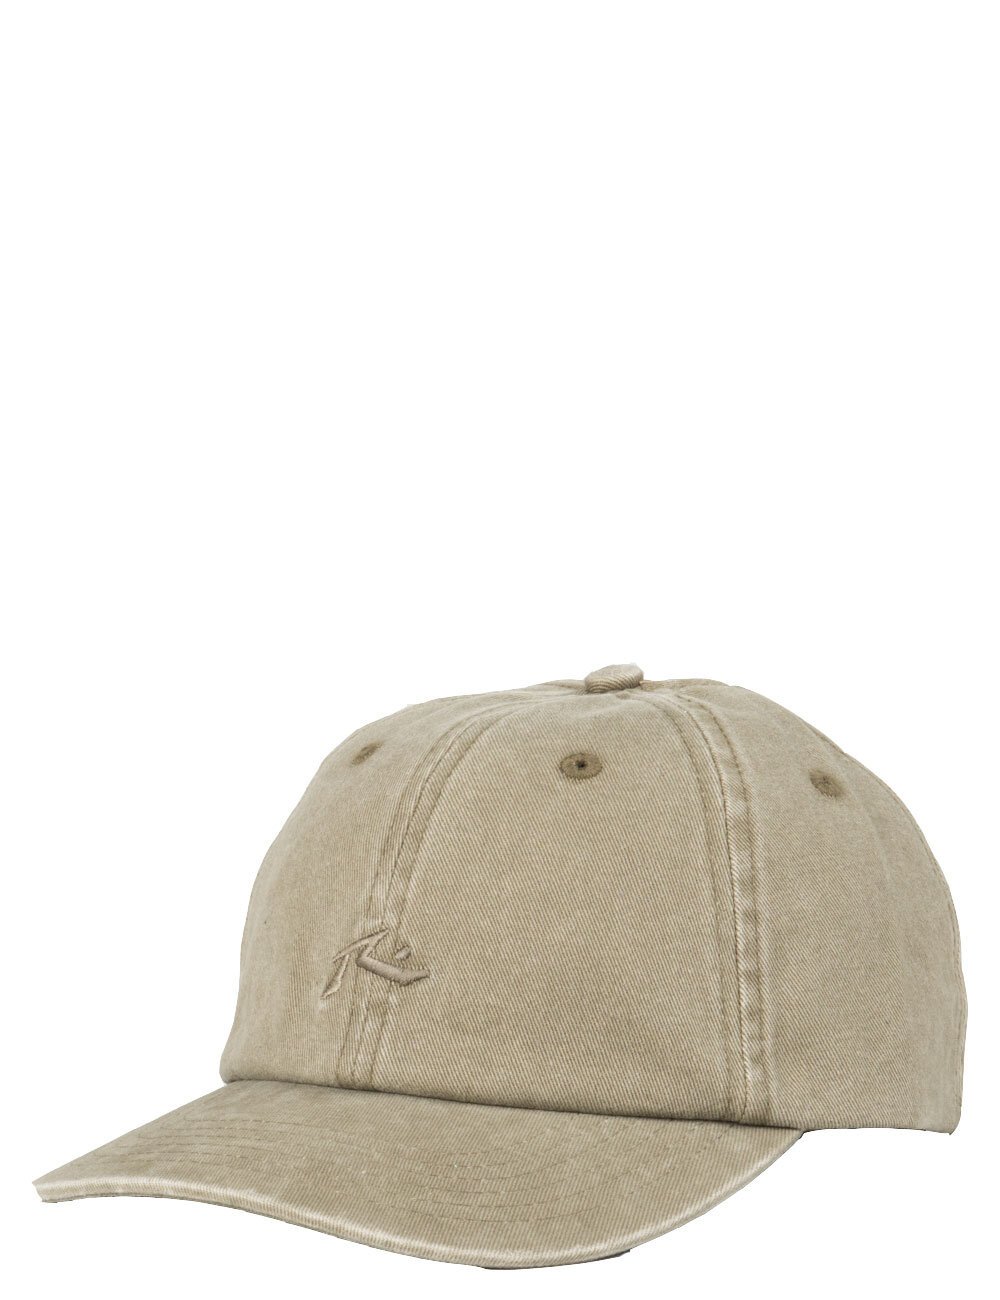 RANTER ADJUSTABLE CAP - Men's Accessories - Shop Sunnies, Hats, Bags ...